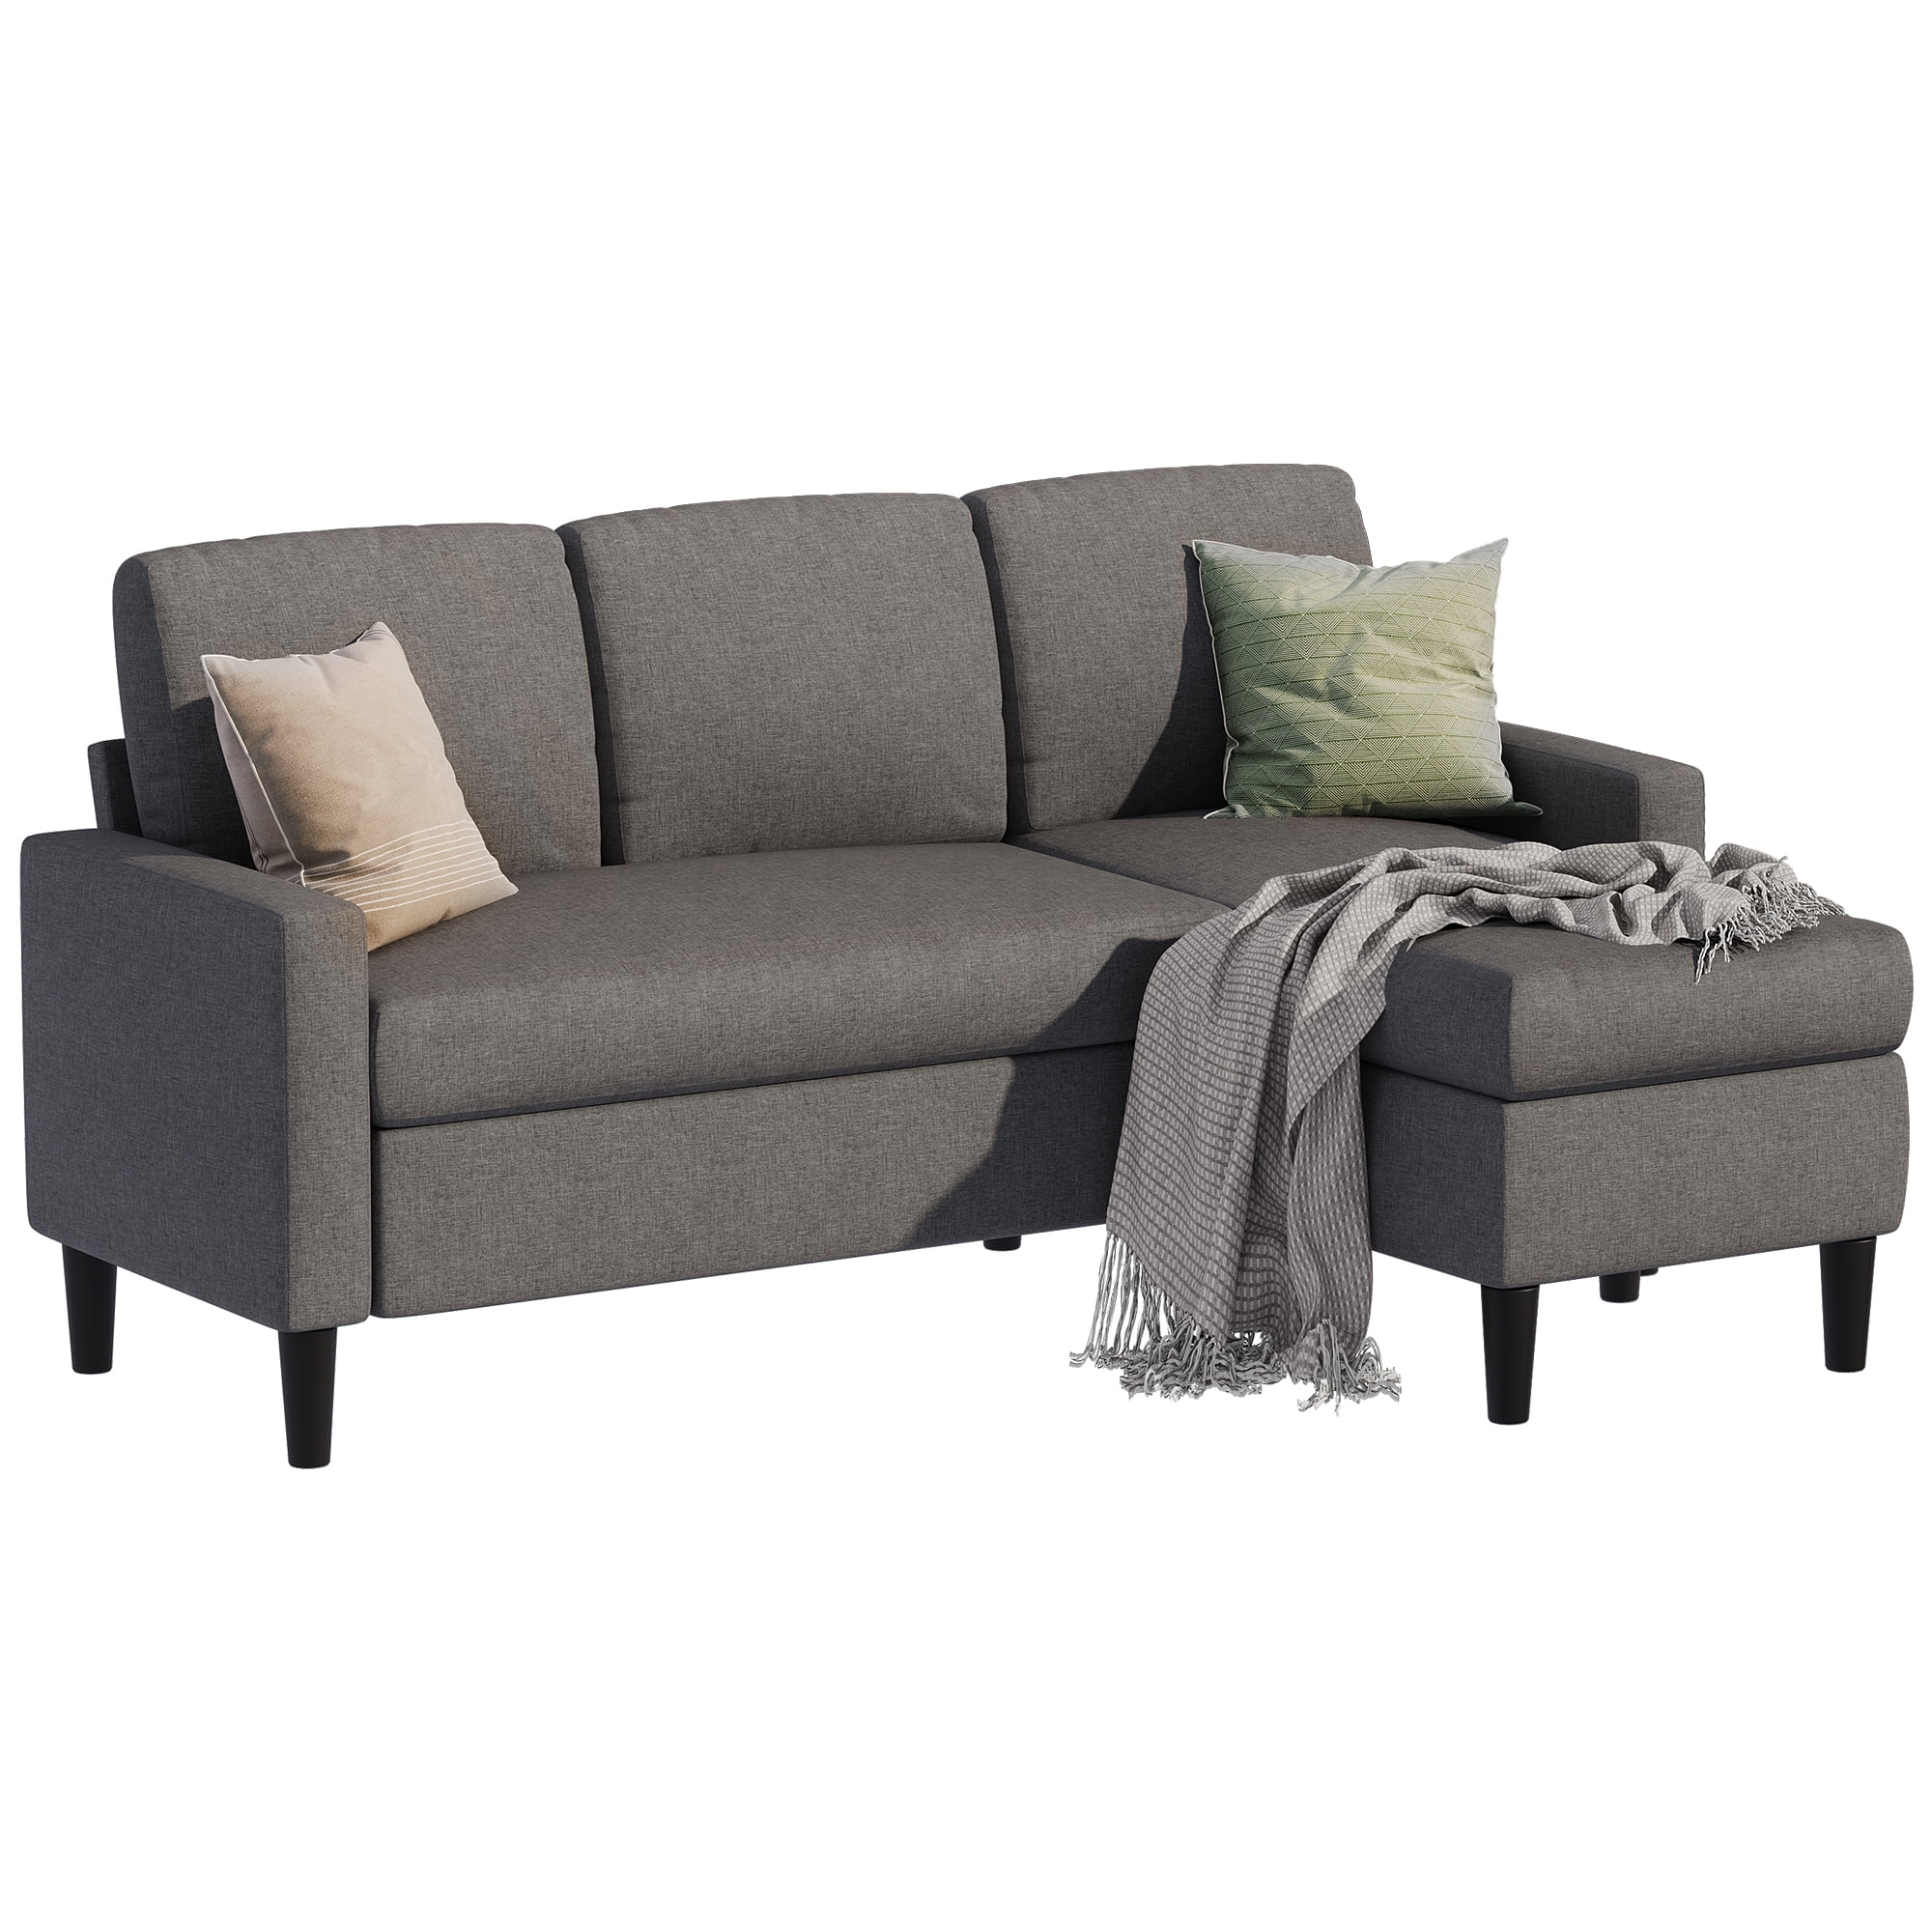 Walsunny Convertible Sectional Sofa